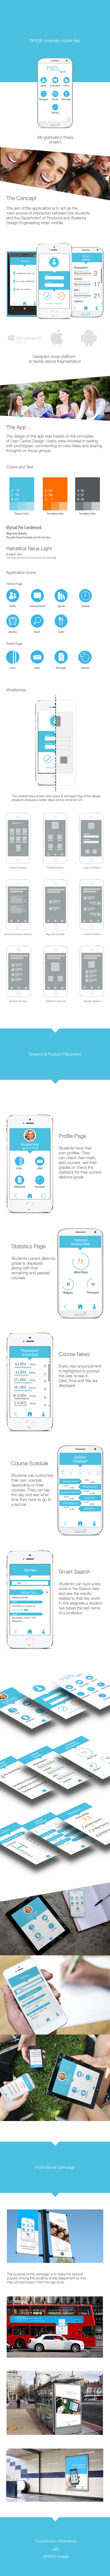 university app Cross-Platform ios7 Windows Mobile 8 android thesis app educational app